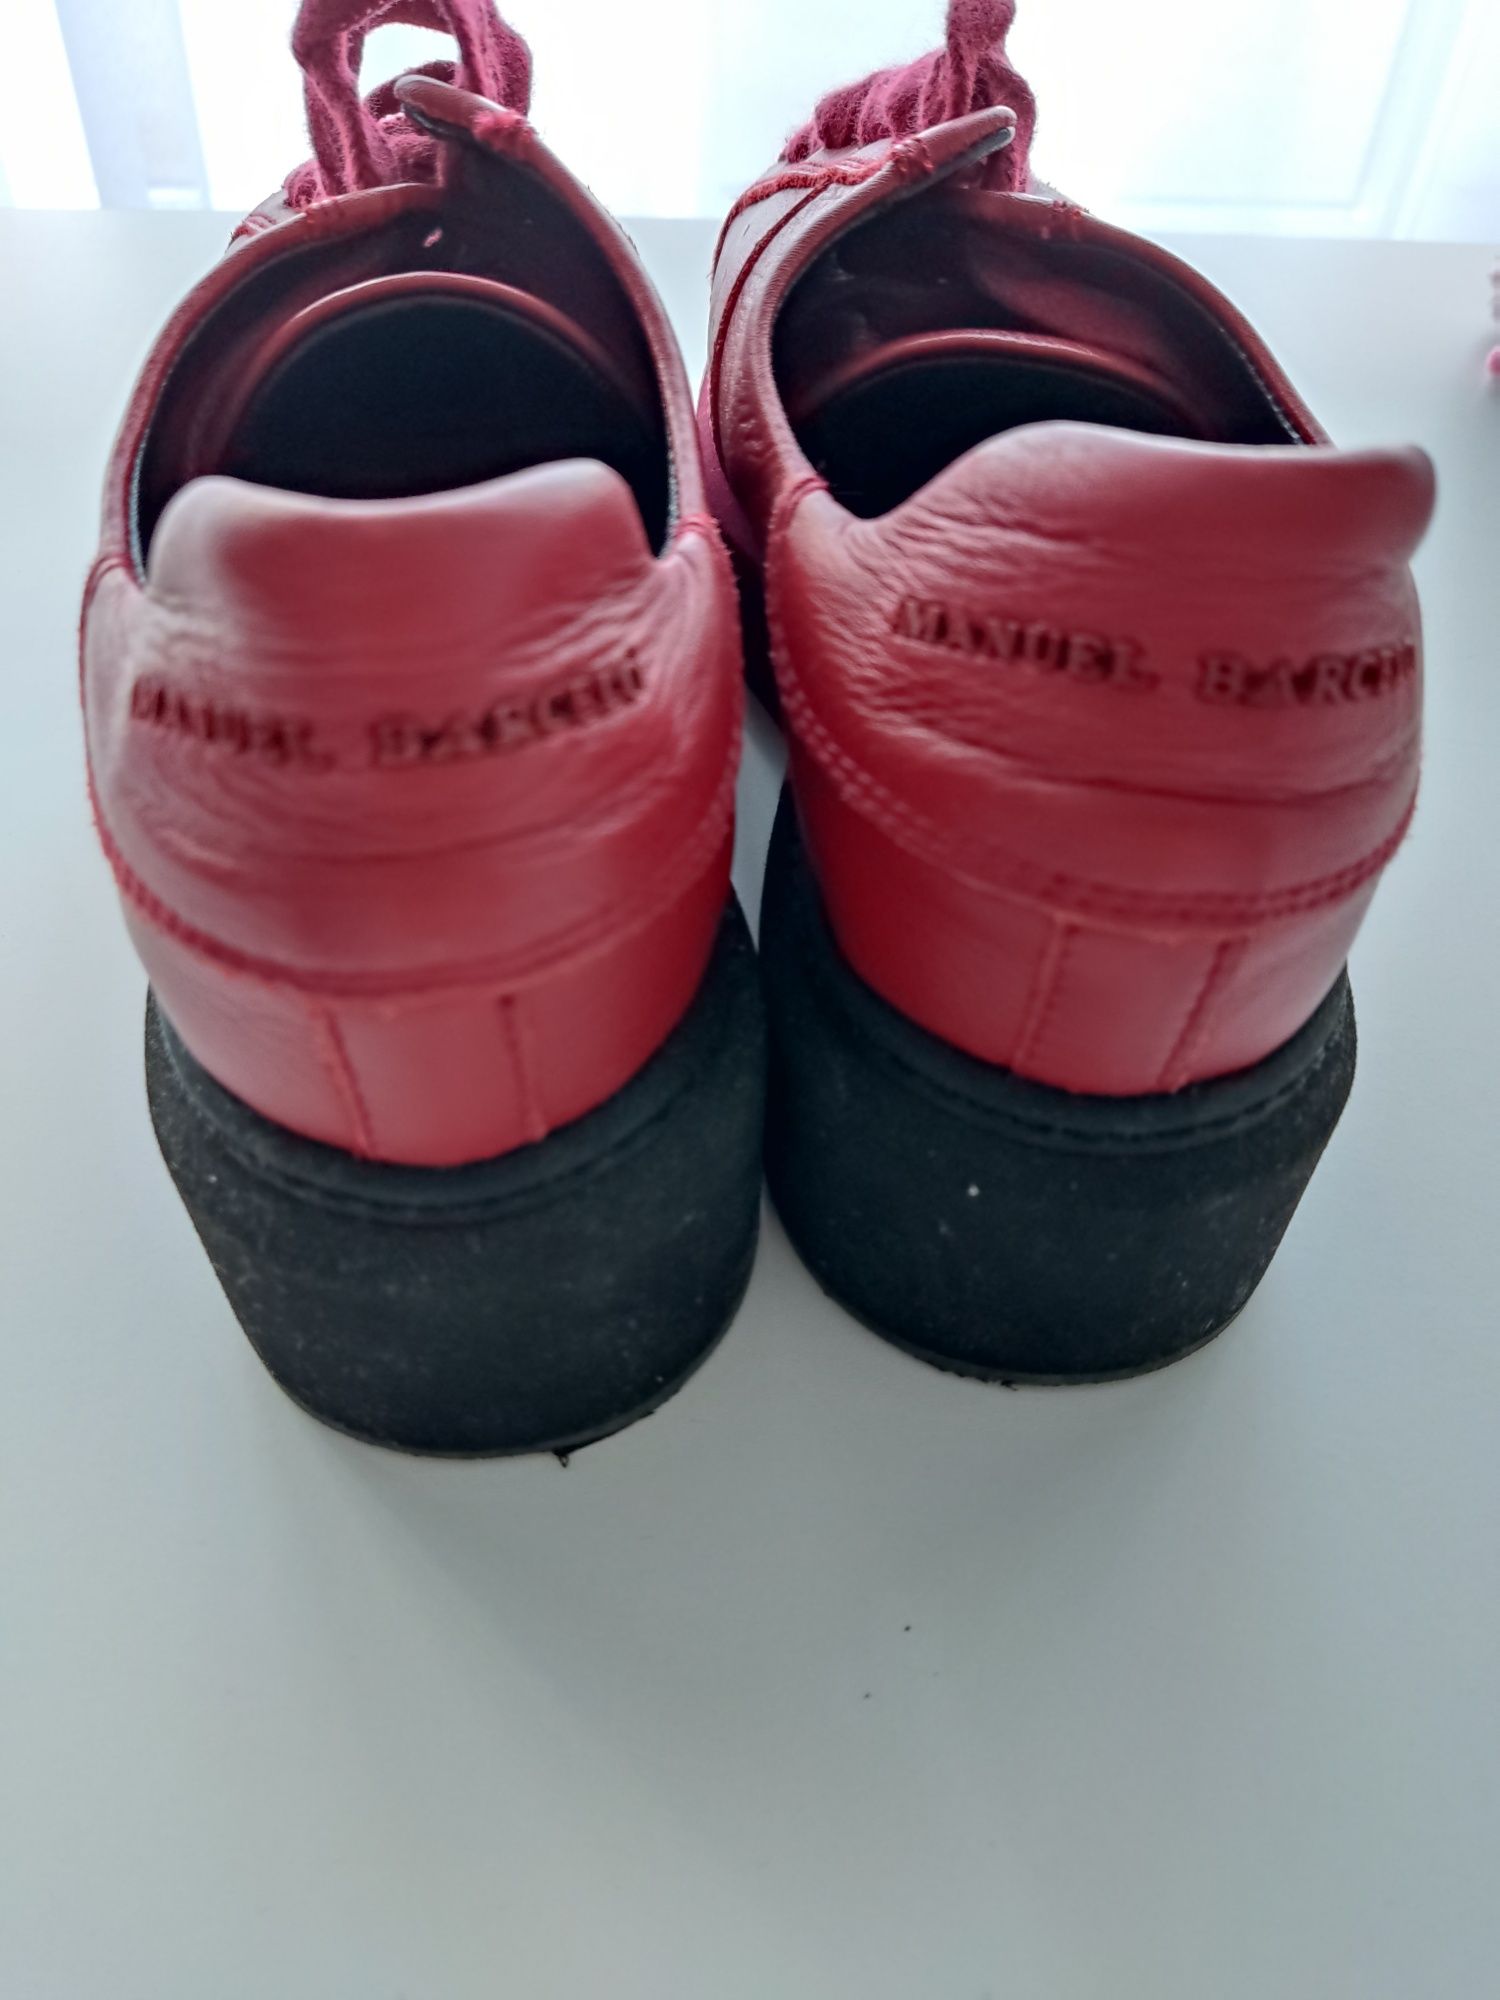 Pantofi Manuel Barcelo 37 dama rosu